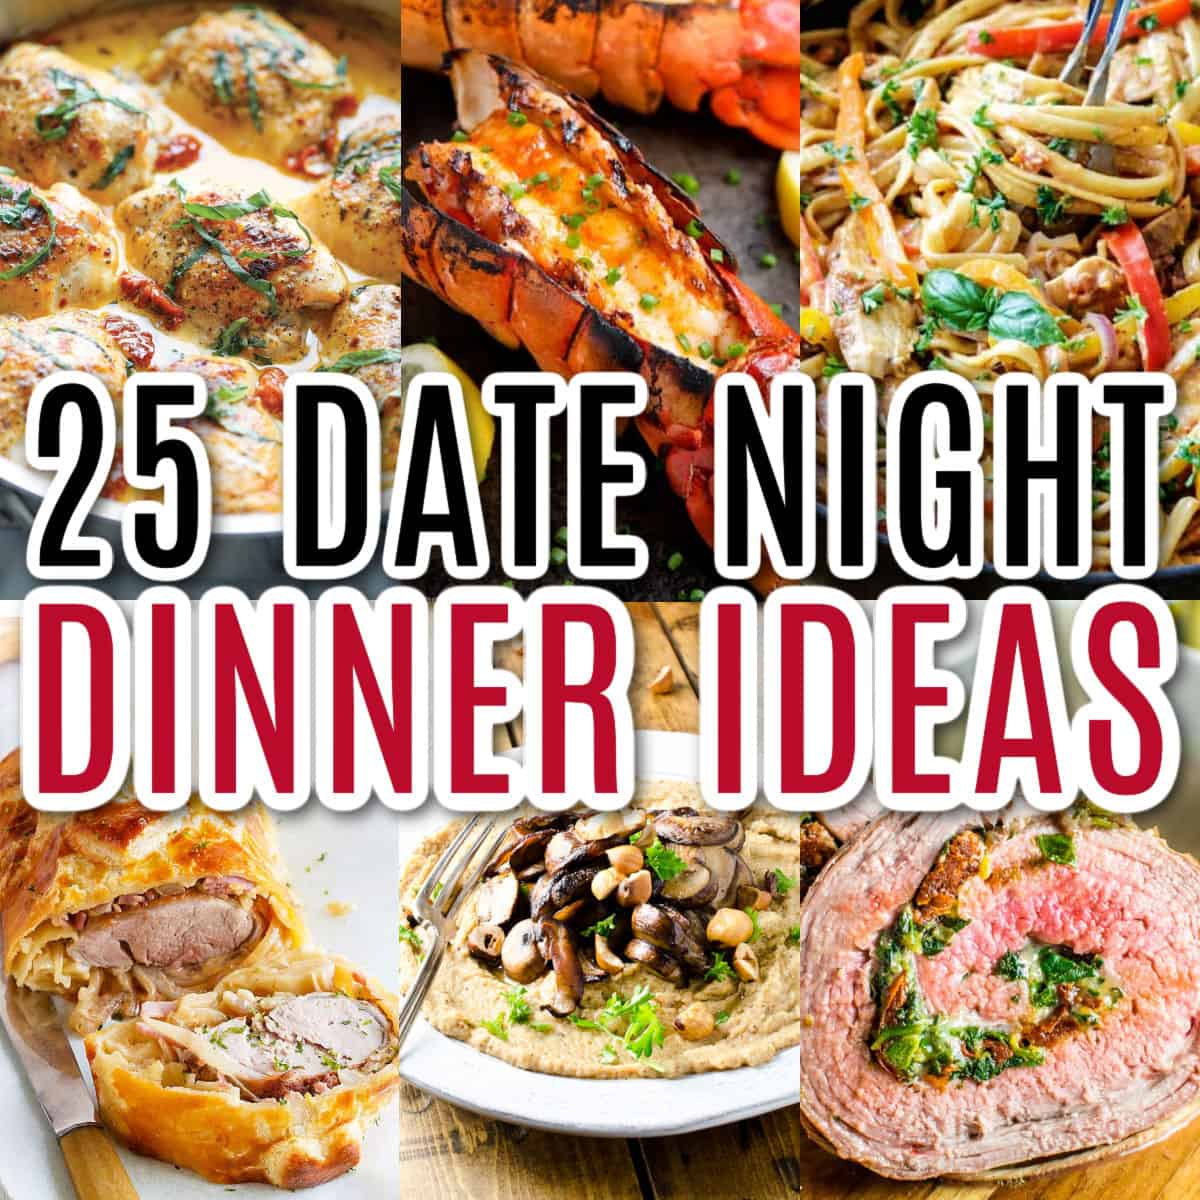 25 Date Night Dinner Ideas ⋆ Real Housemoms